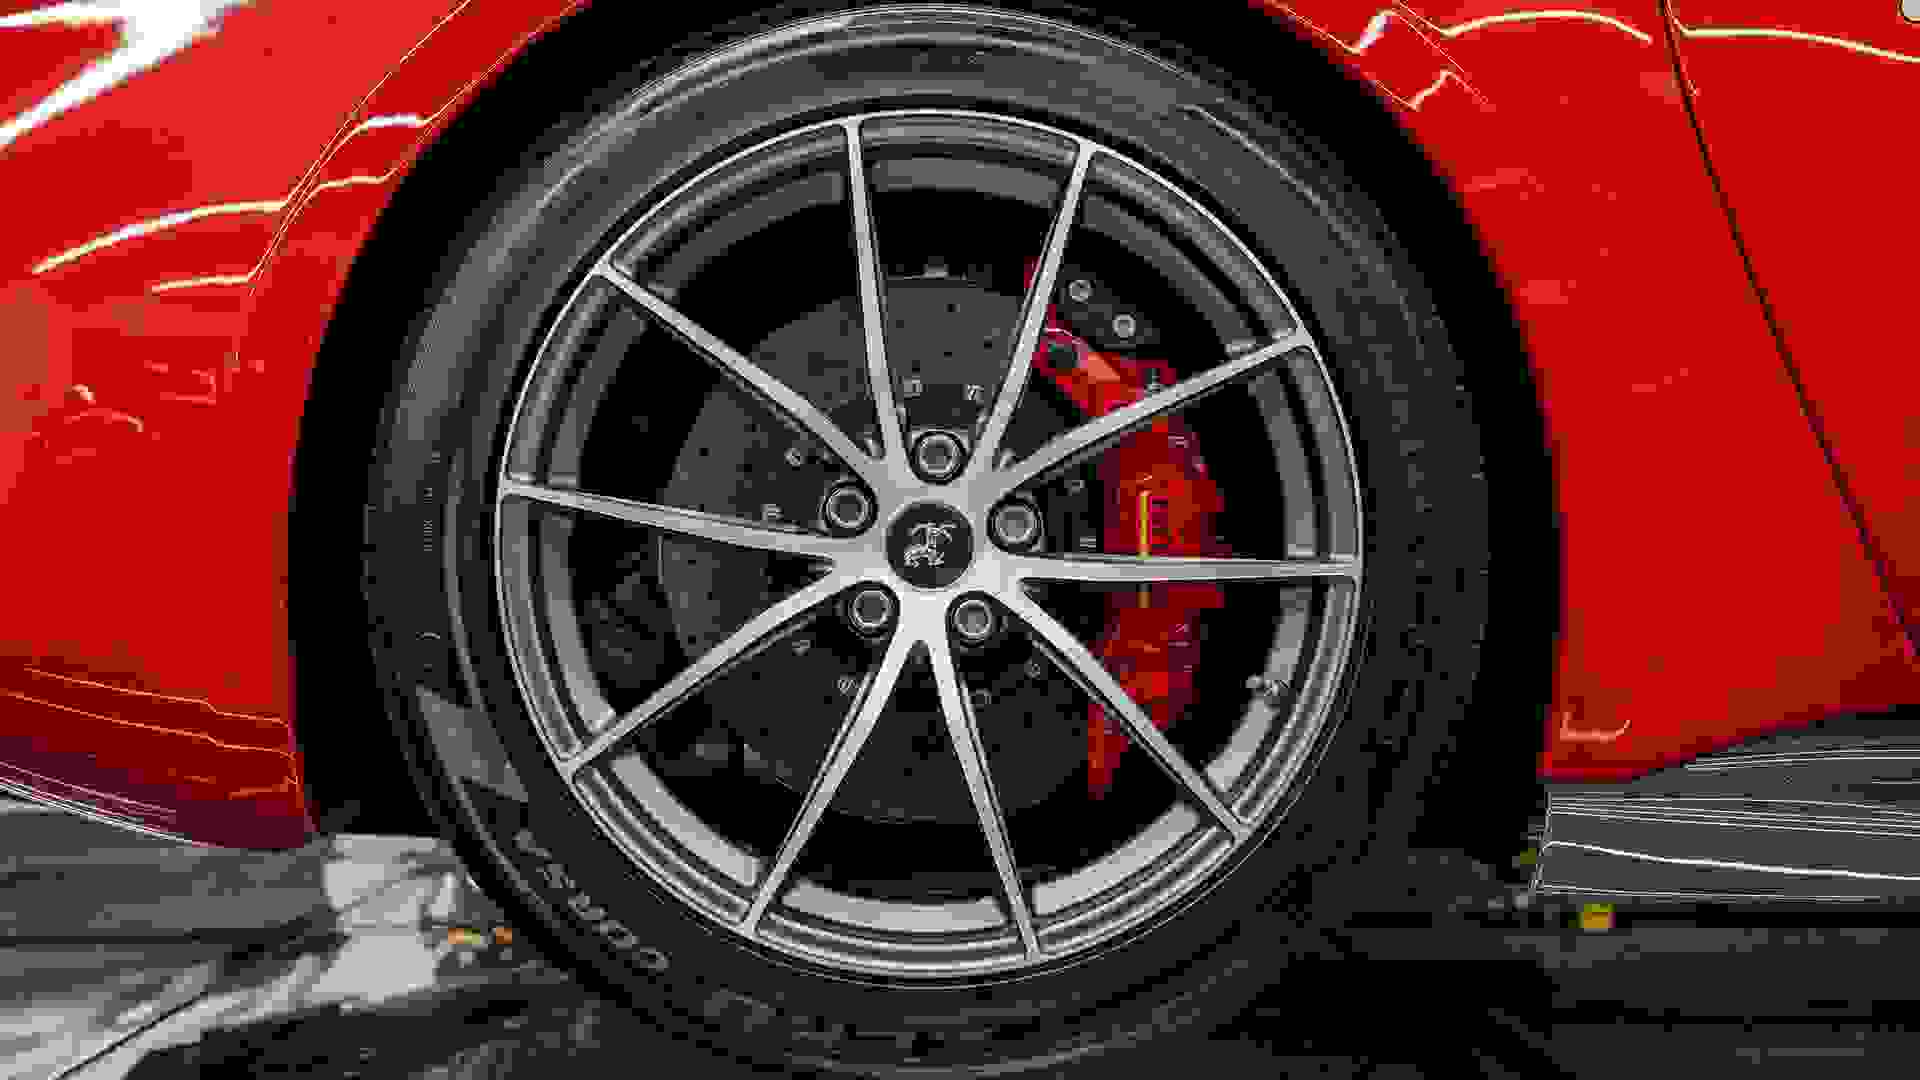 Ferrari F12 Photo e946b274-3608-4d37-ac6d-89a94d0bac72.jpg